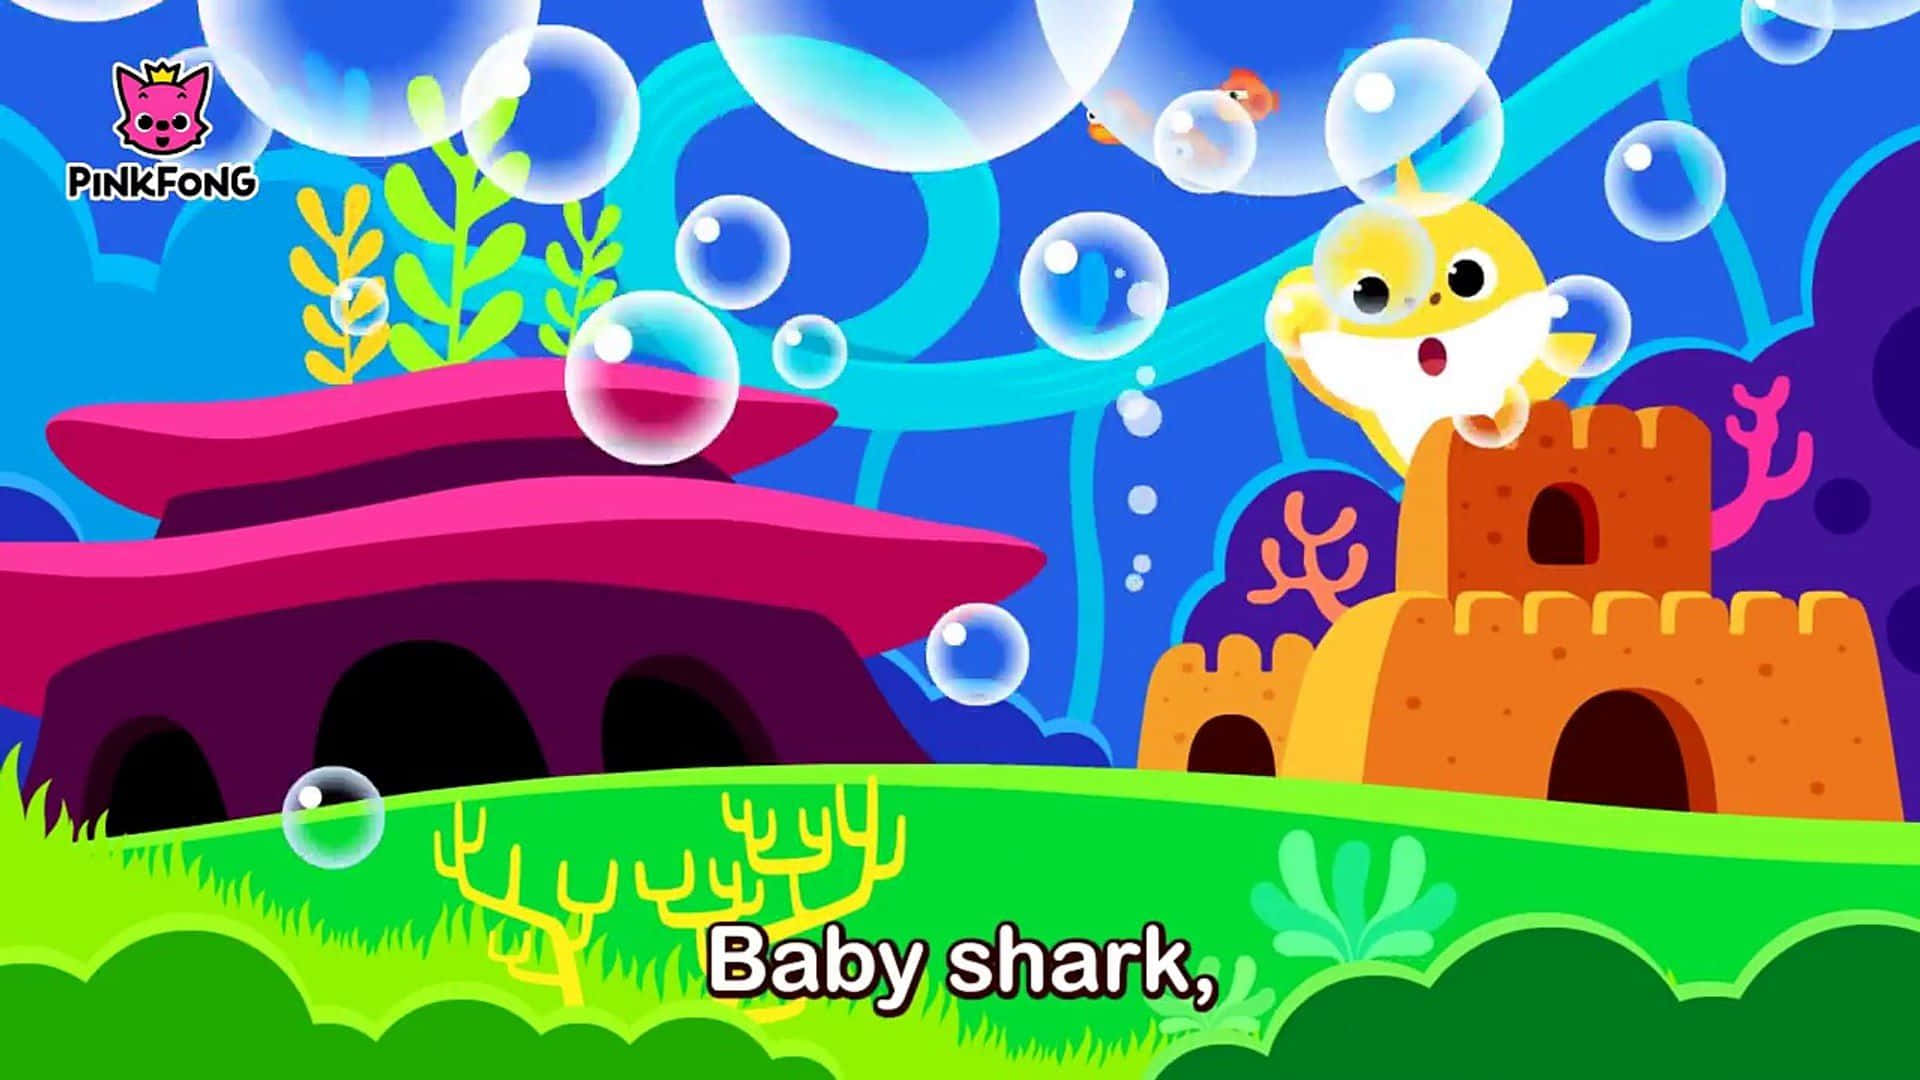 "Little kids love baby shark!"